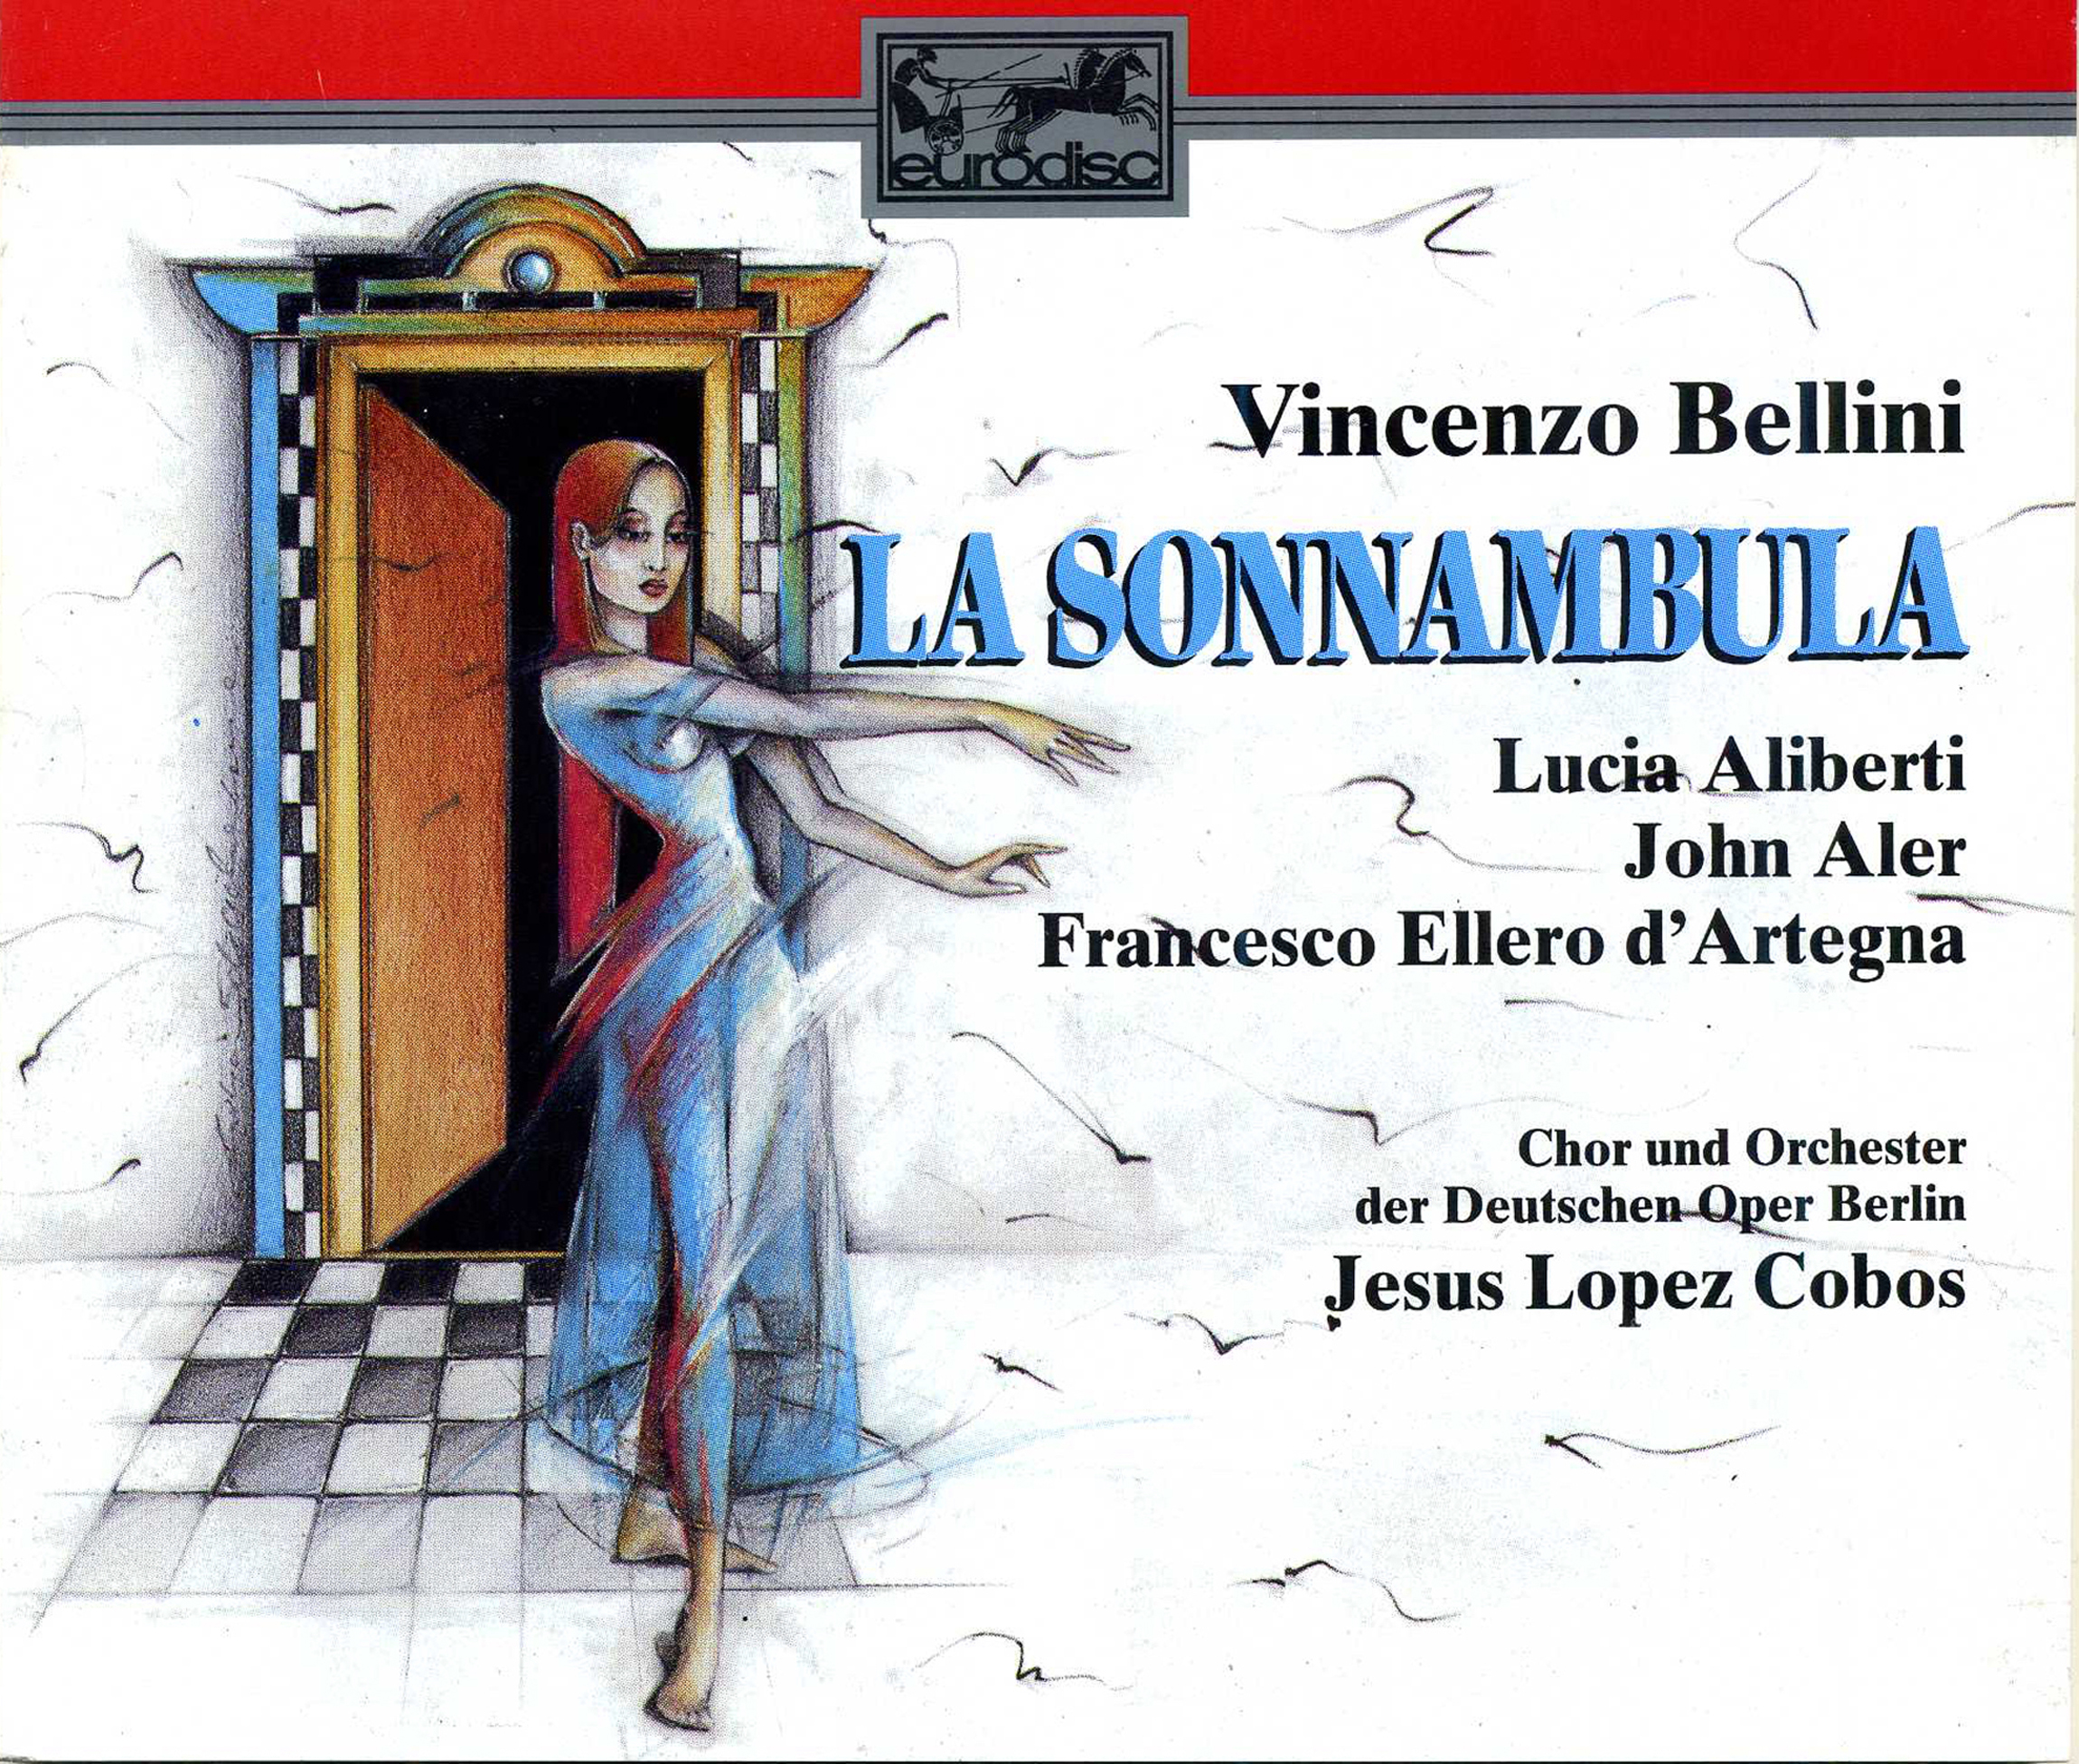 Lucia Aliberti with John Aler and Francesco Ellero D'Artegna⚘"La Sonnambula"⚘Opera⚘conductor Jesus Lopez Cobos⚘Orchestra and Chorus of Deutsche Oper Berlin⚘Berlin⚘Eurodisc BMG Classics⚘:http://www.luciaaliberti.it #luciaaliberti #jesuslopezcobos  #johnaler #francescoellerodartegna #eurodiscbmgclassics #lasonnambula #opera #deutscheoperberlin #berlin